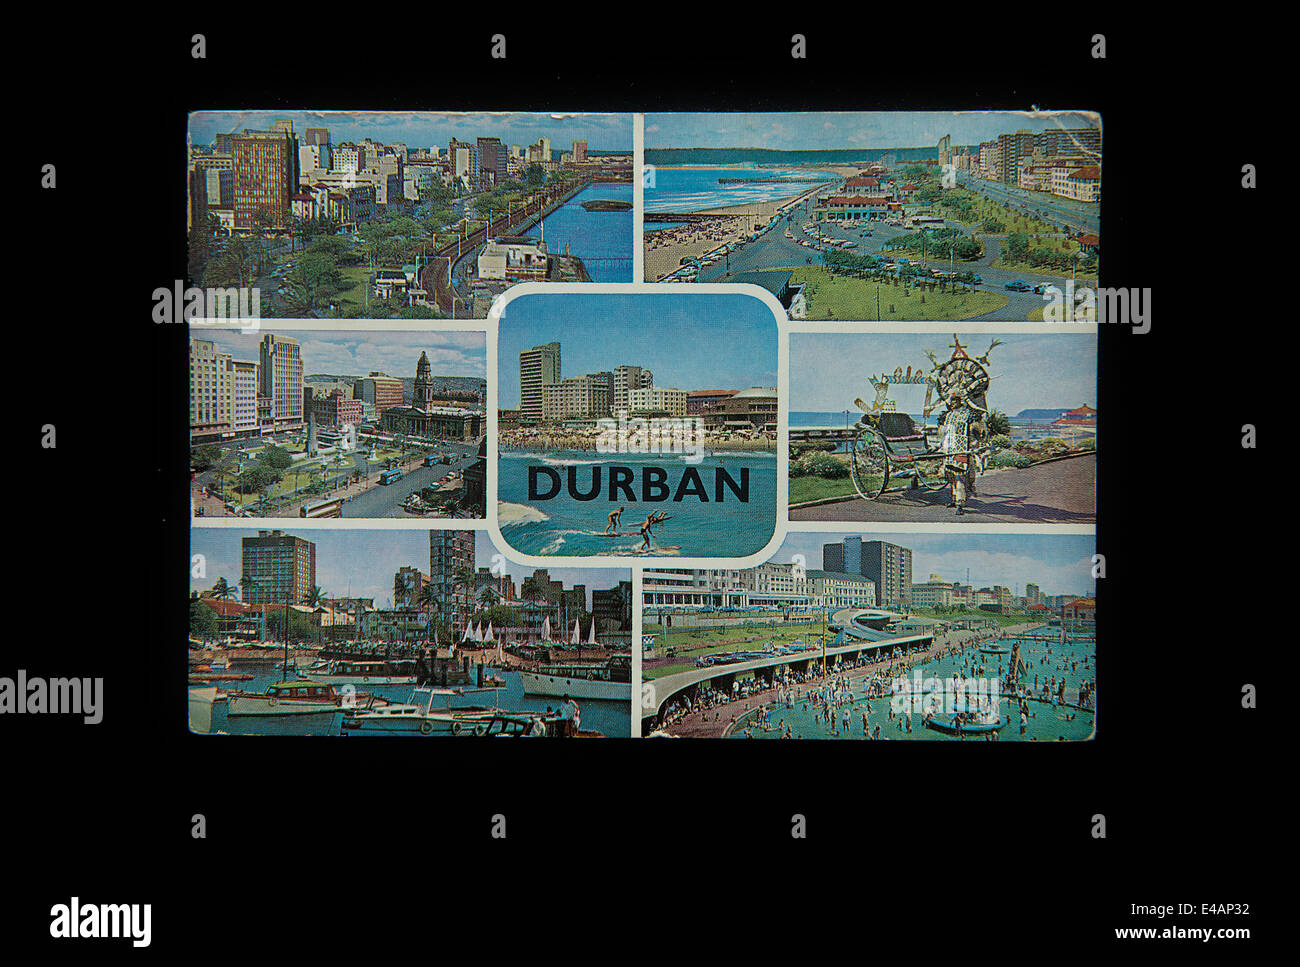 Durban en una vieja postal Foto de stock